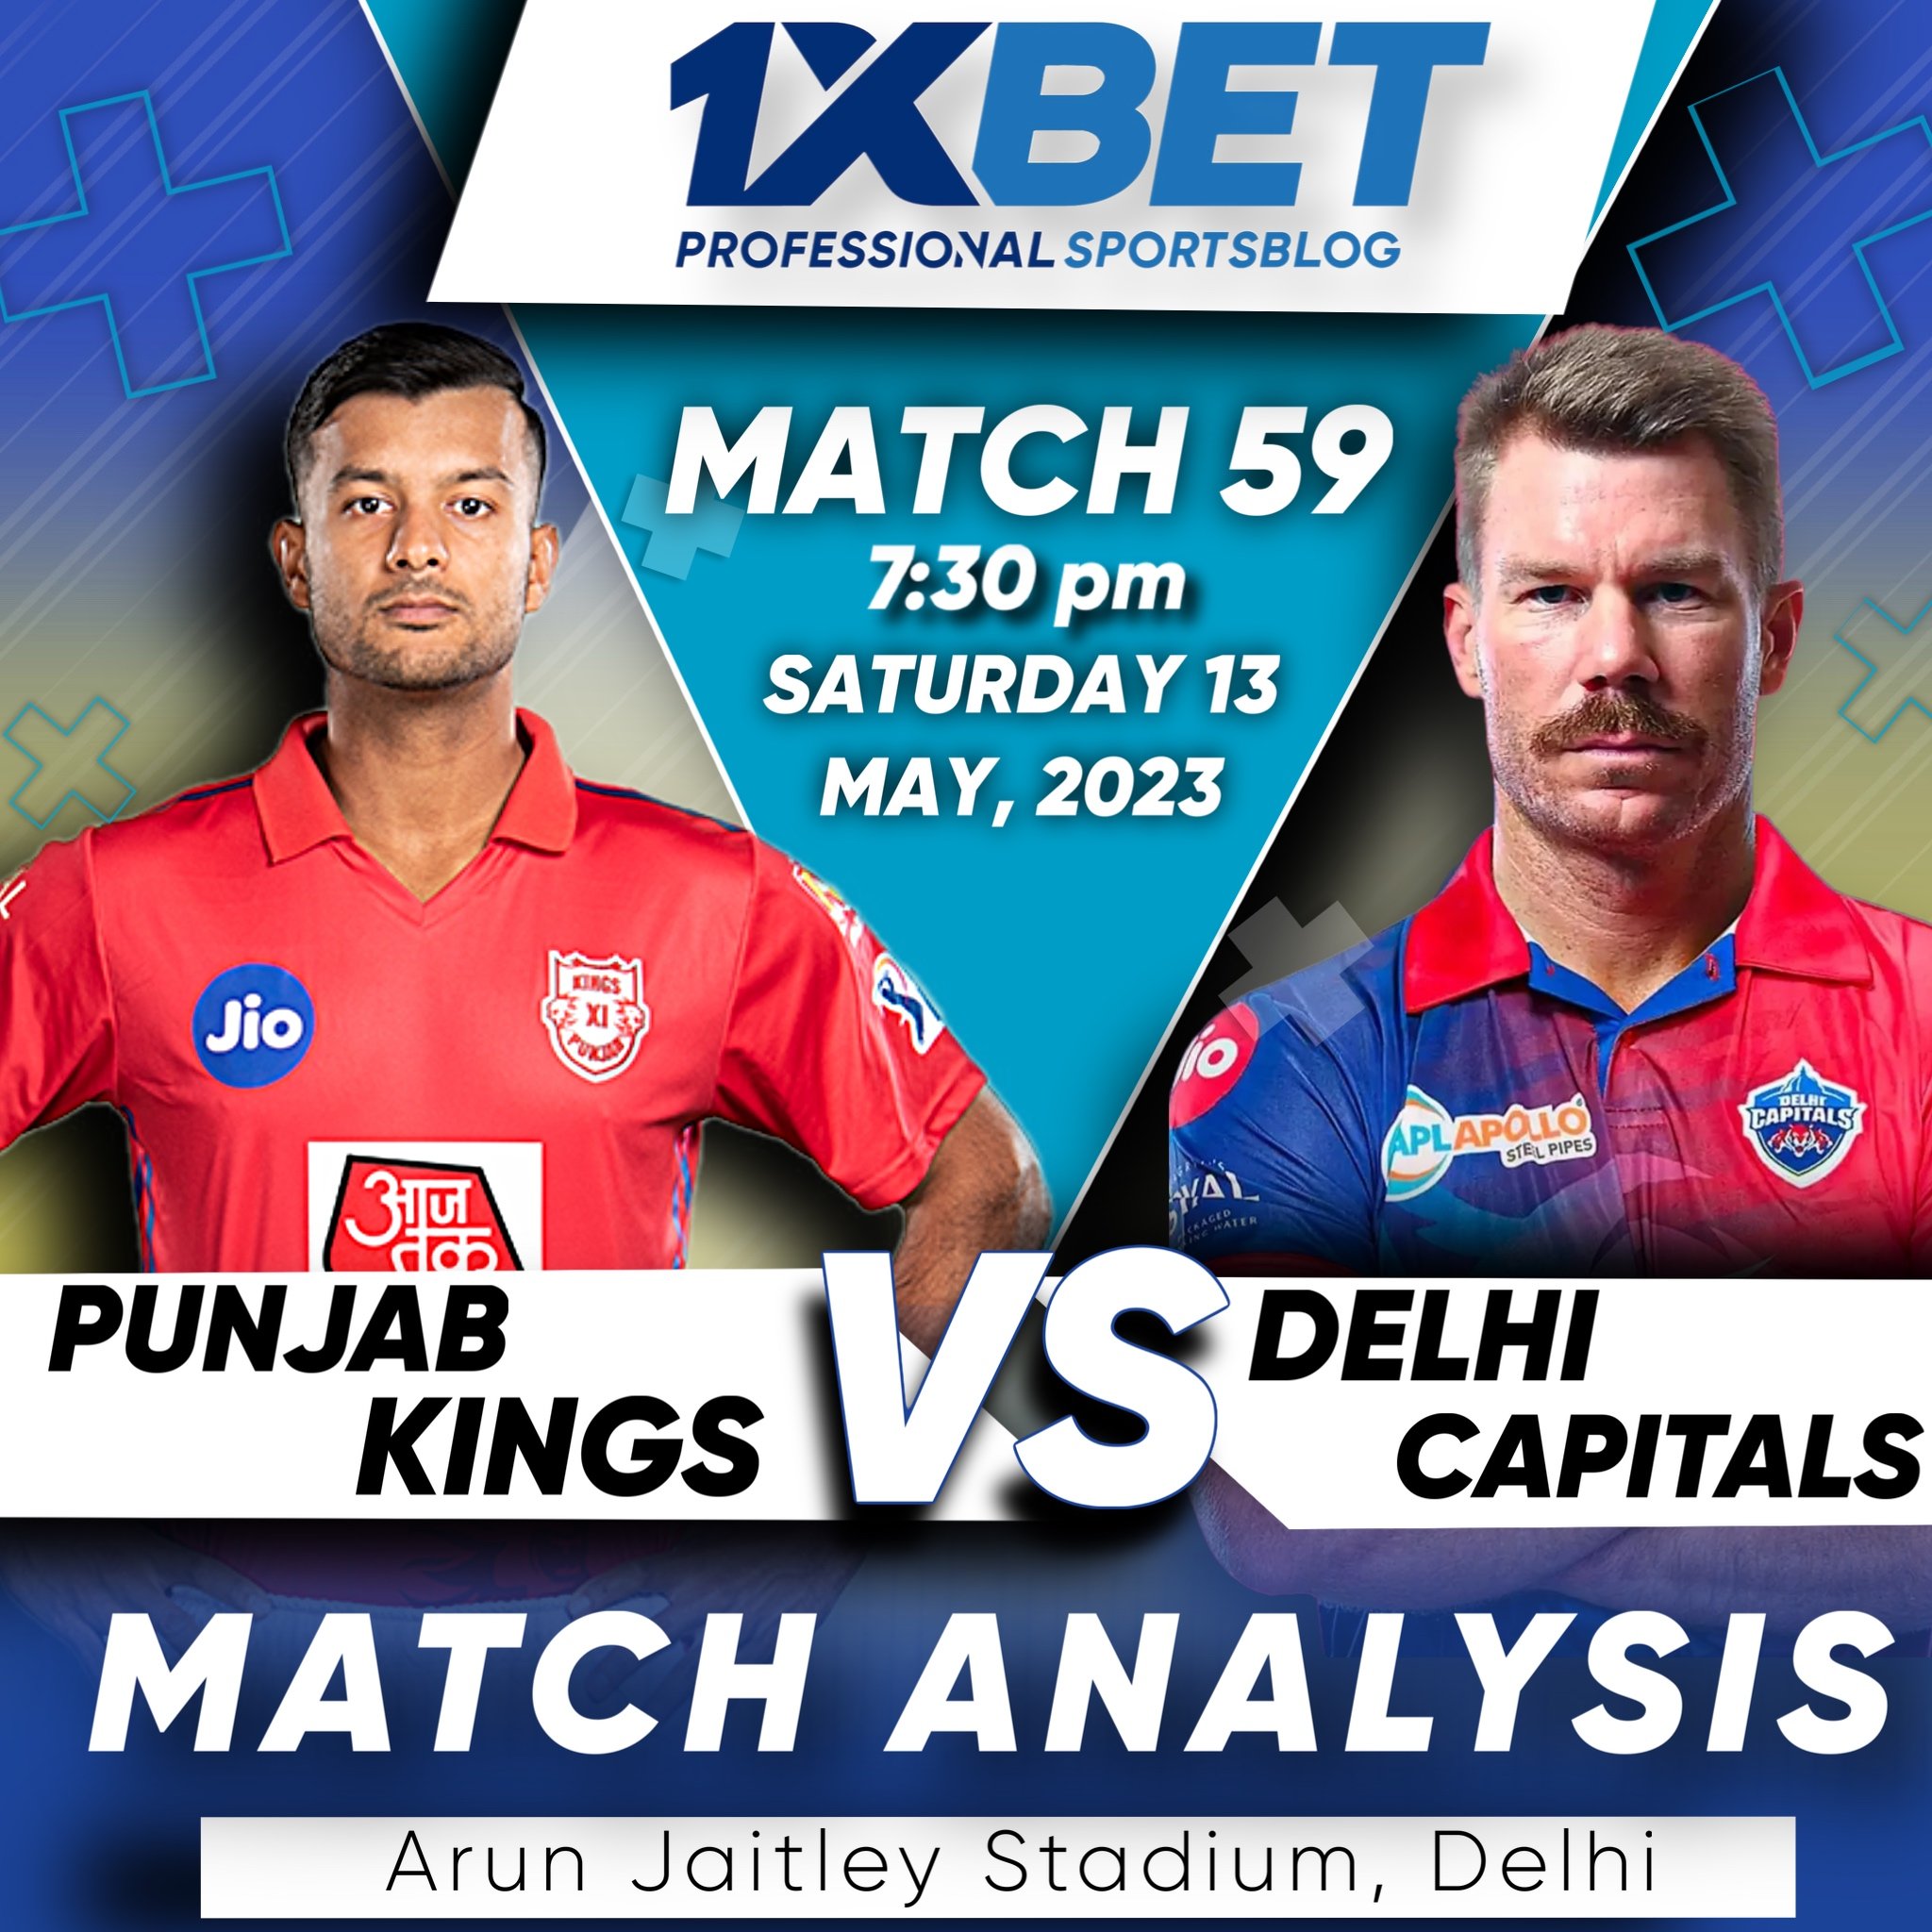 Delhi Capitals vs Punjab Kings, IPL 2023, 59th Match Analysis